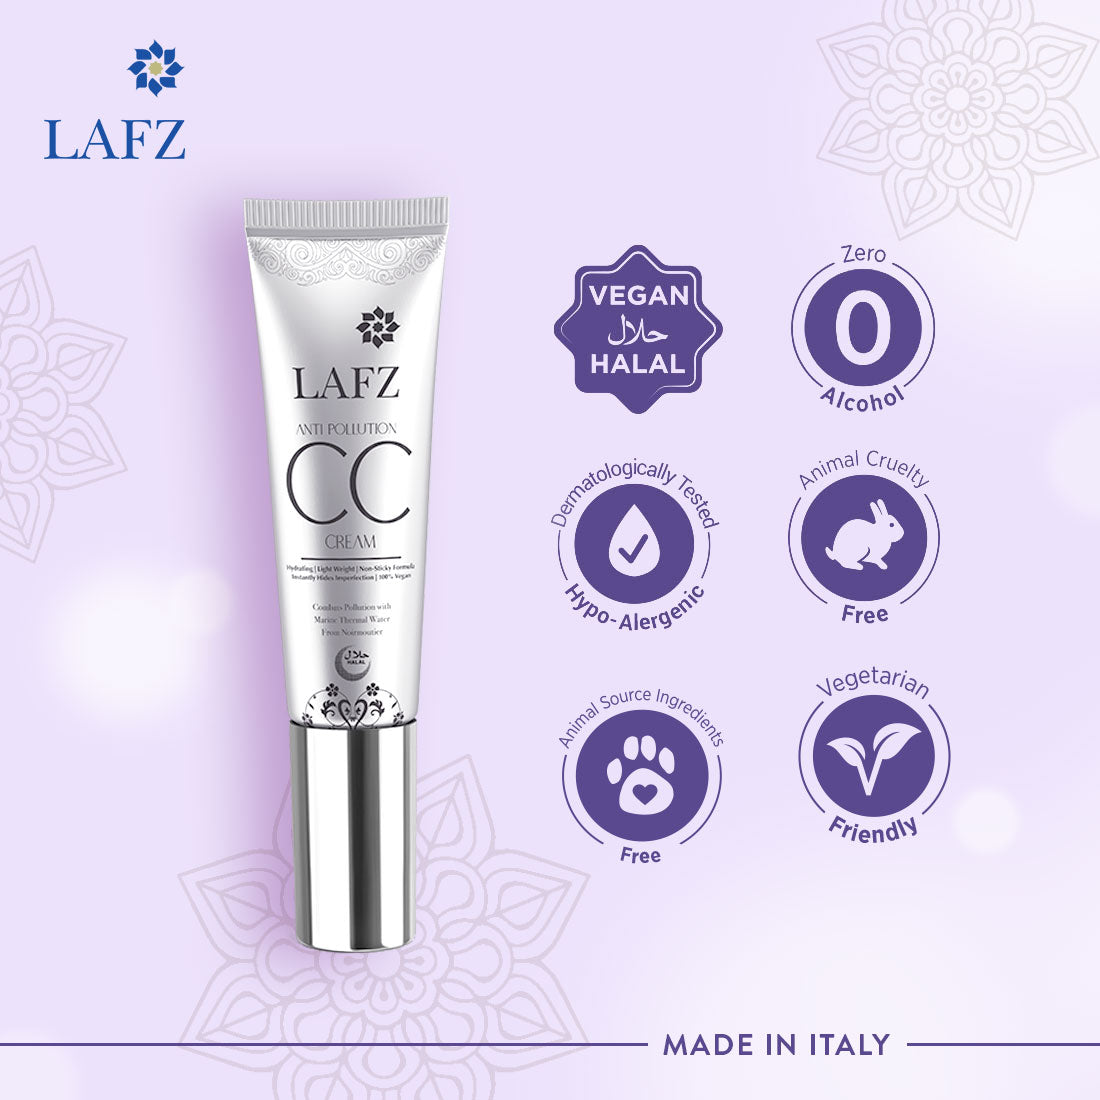 Lafz Anti Pollution CC Cream (30ml)